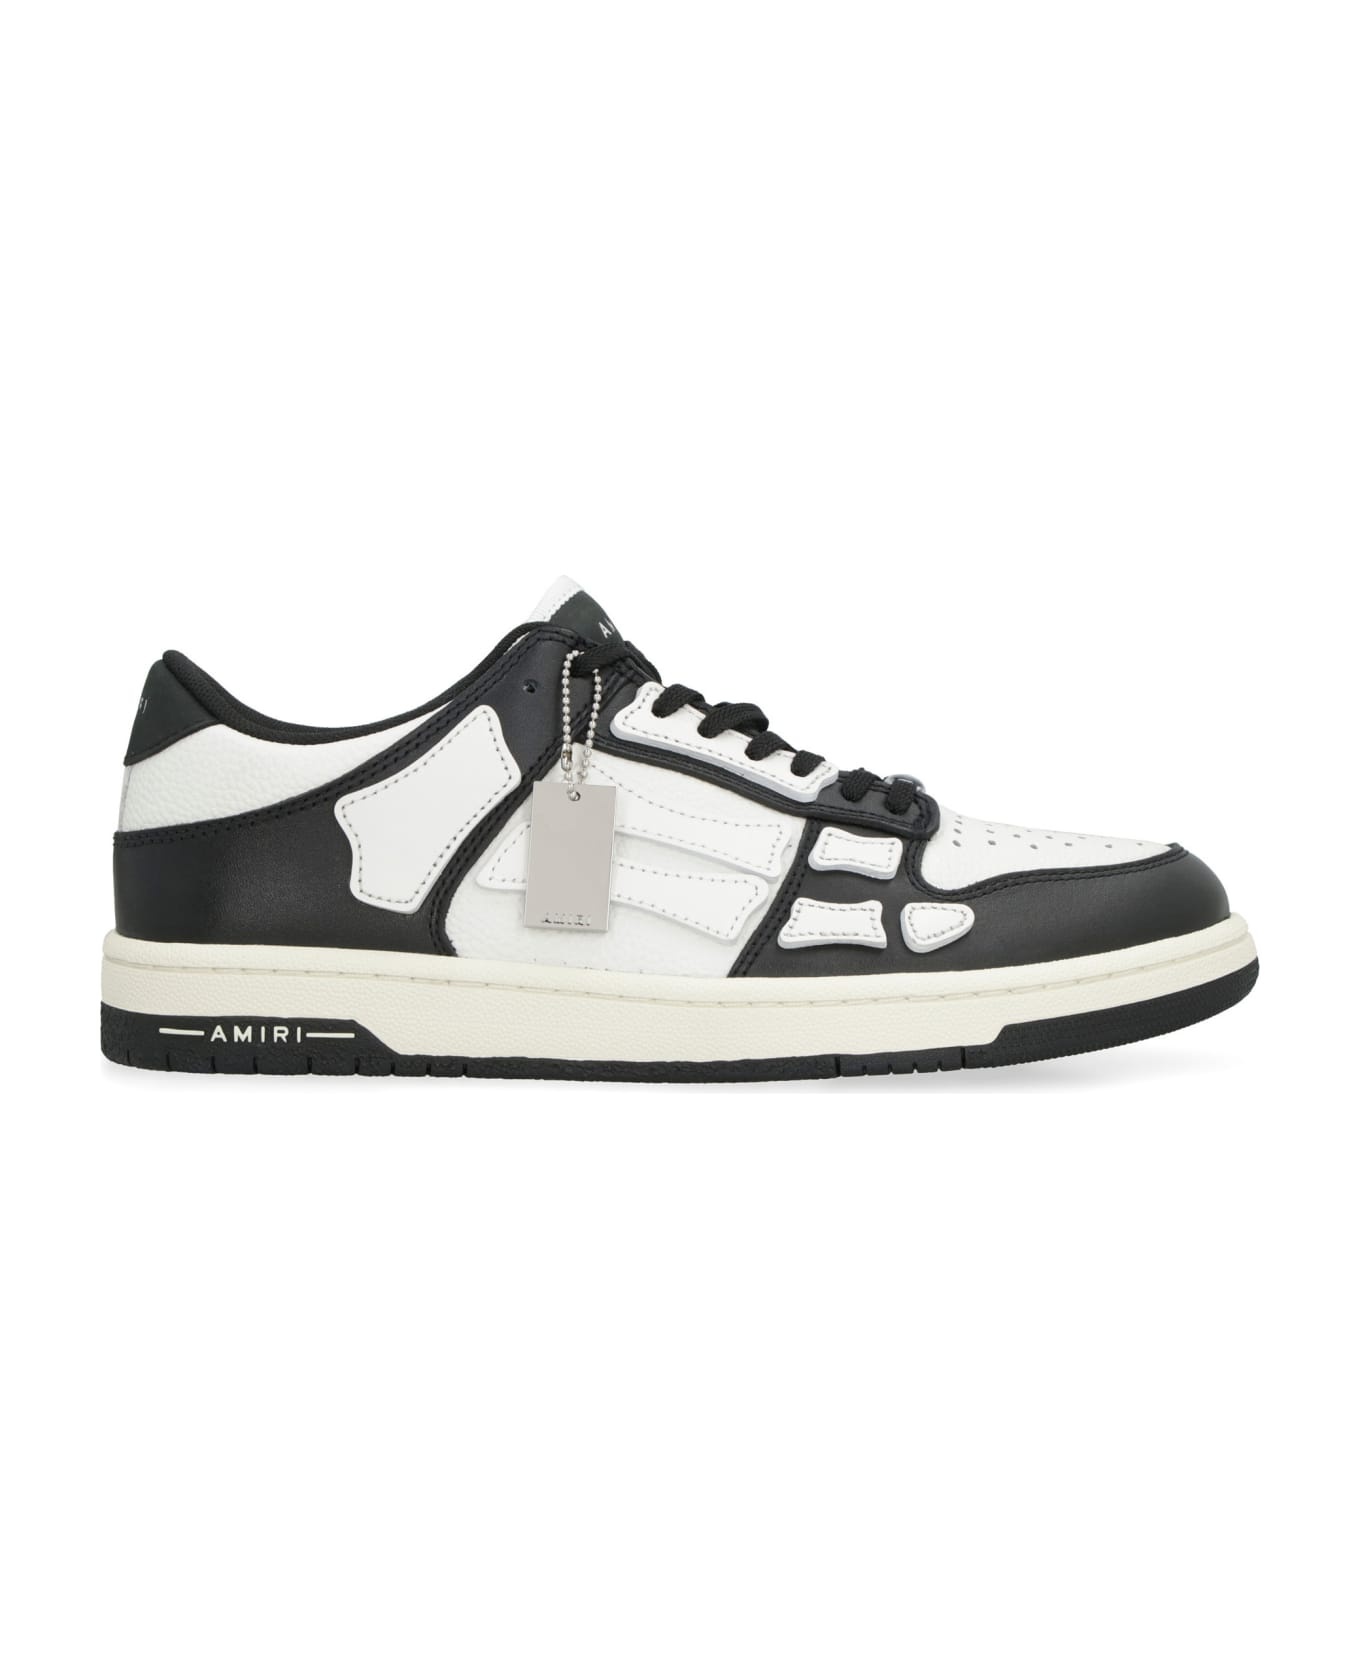 Black And White Skel Low Sneakers - 2